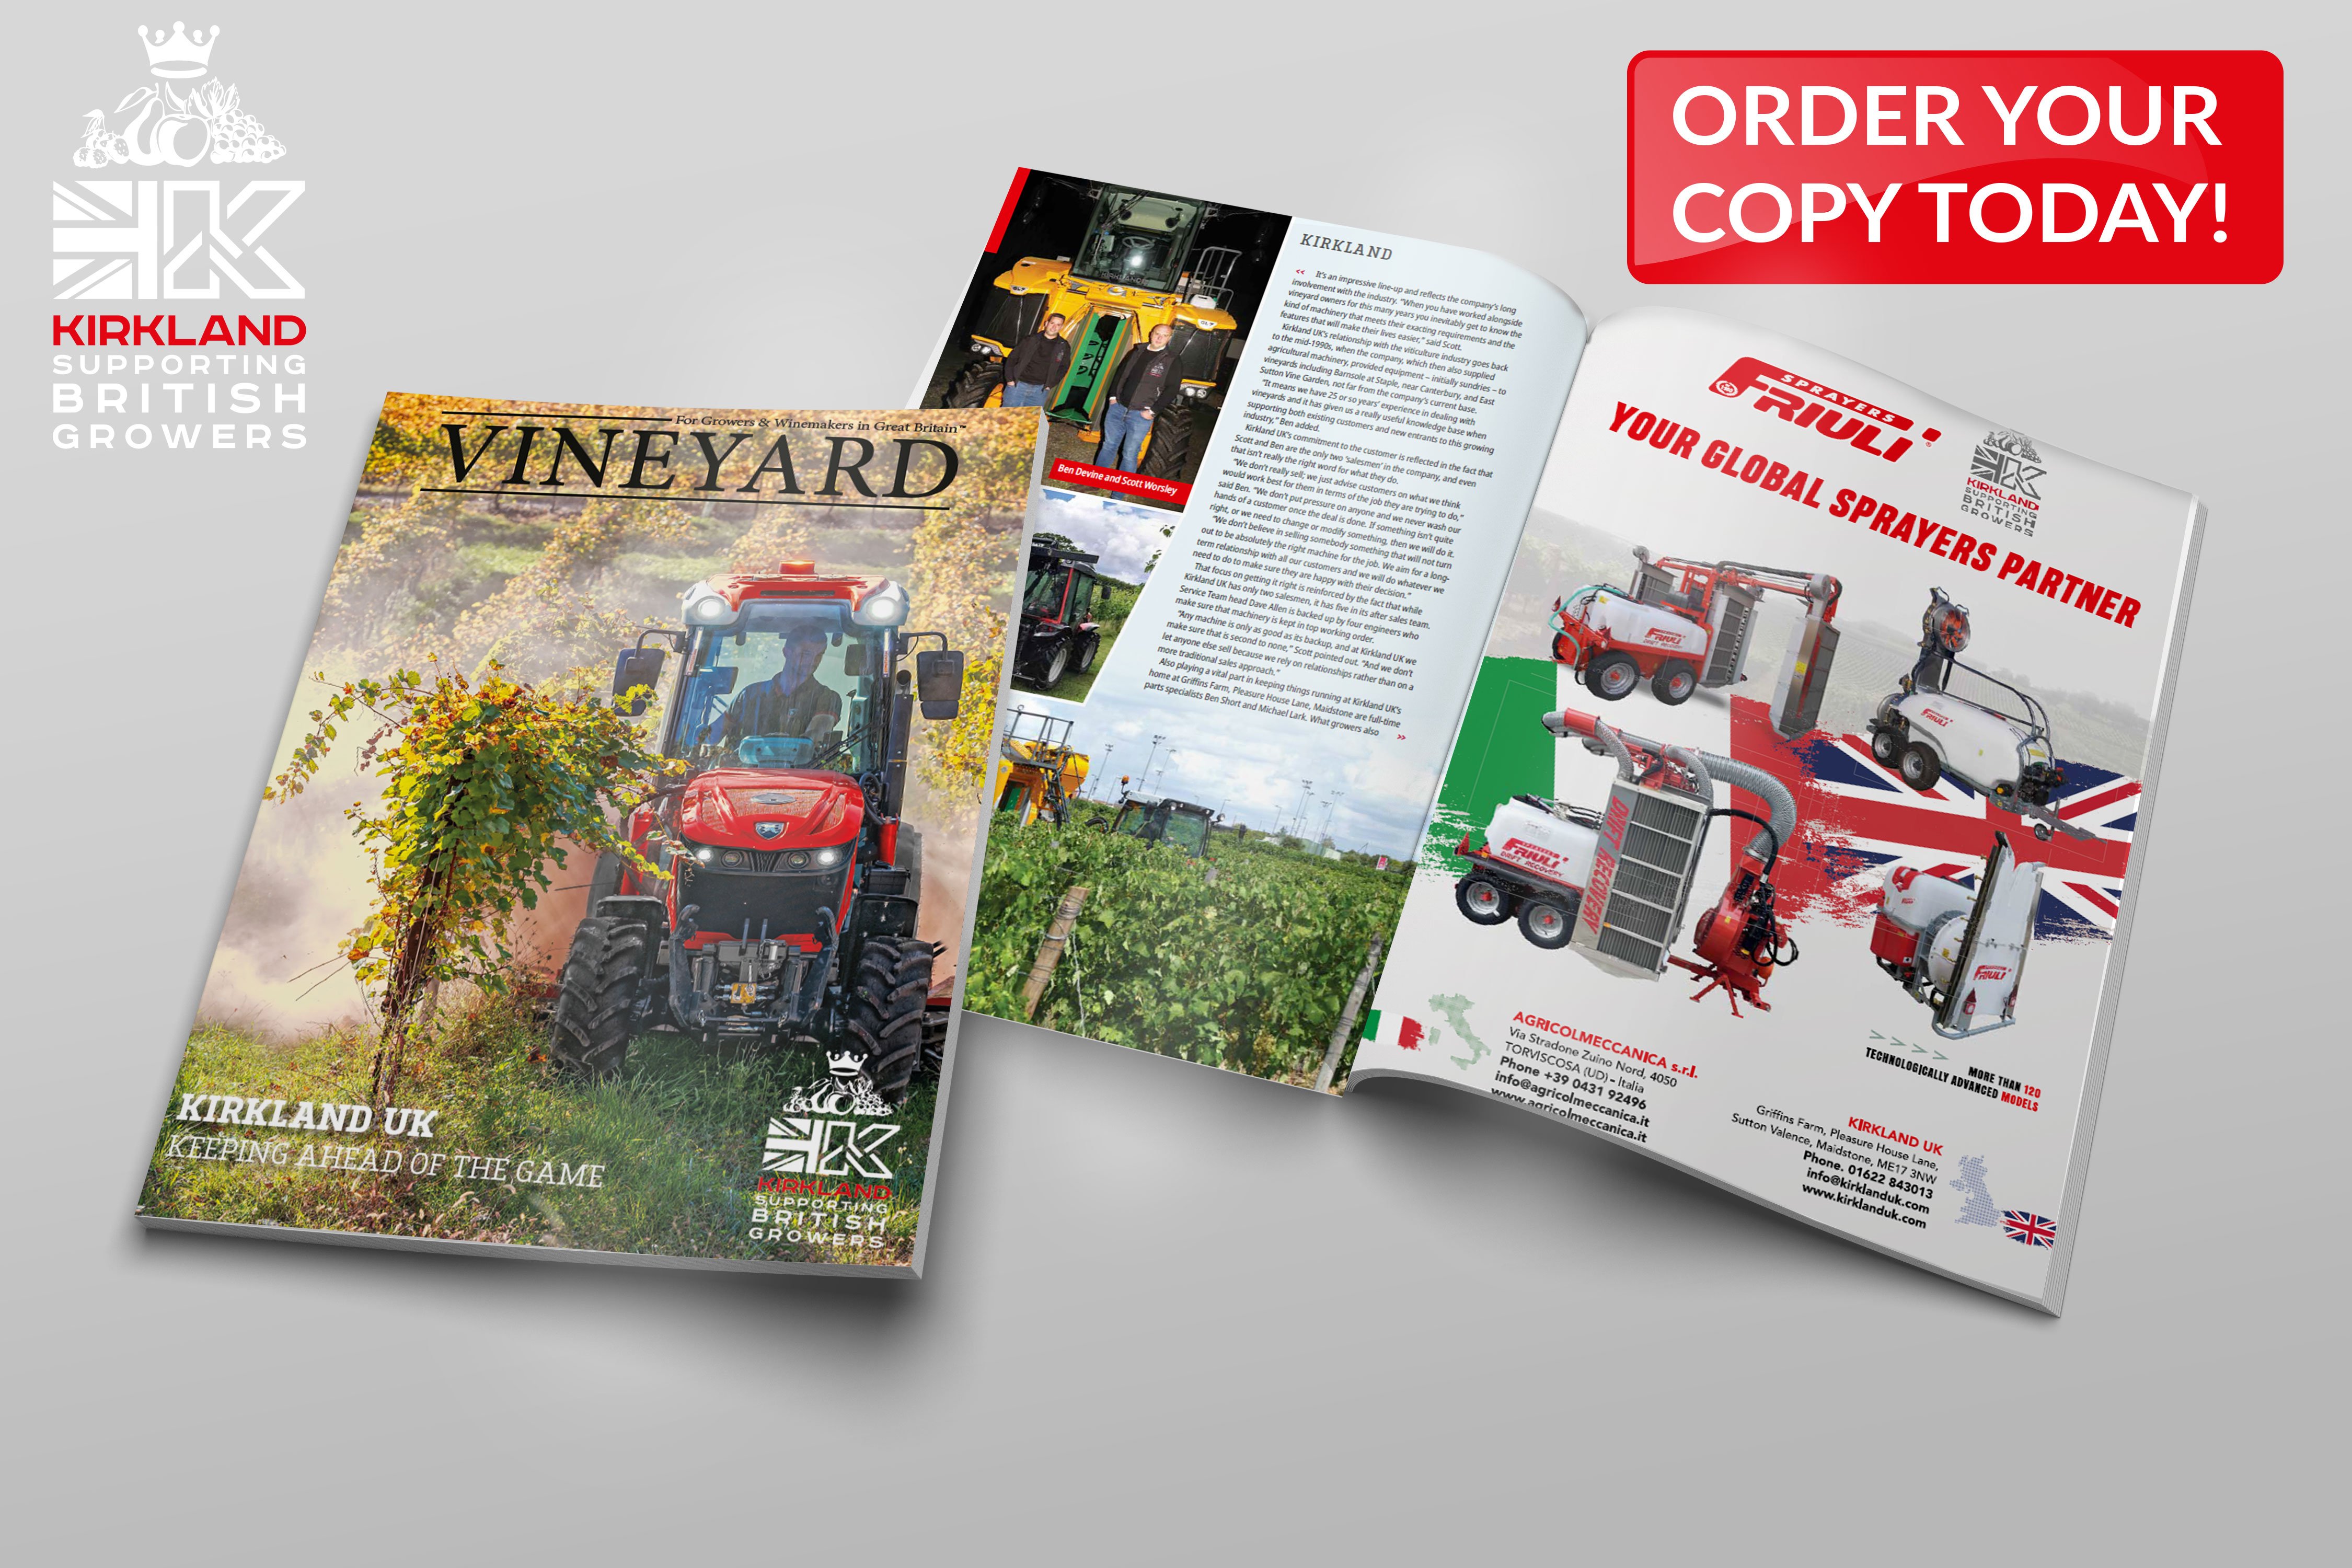 Vineyard Magazine features Kirkland UK